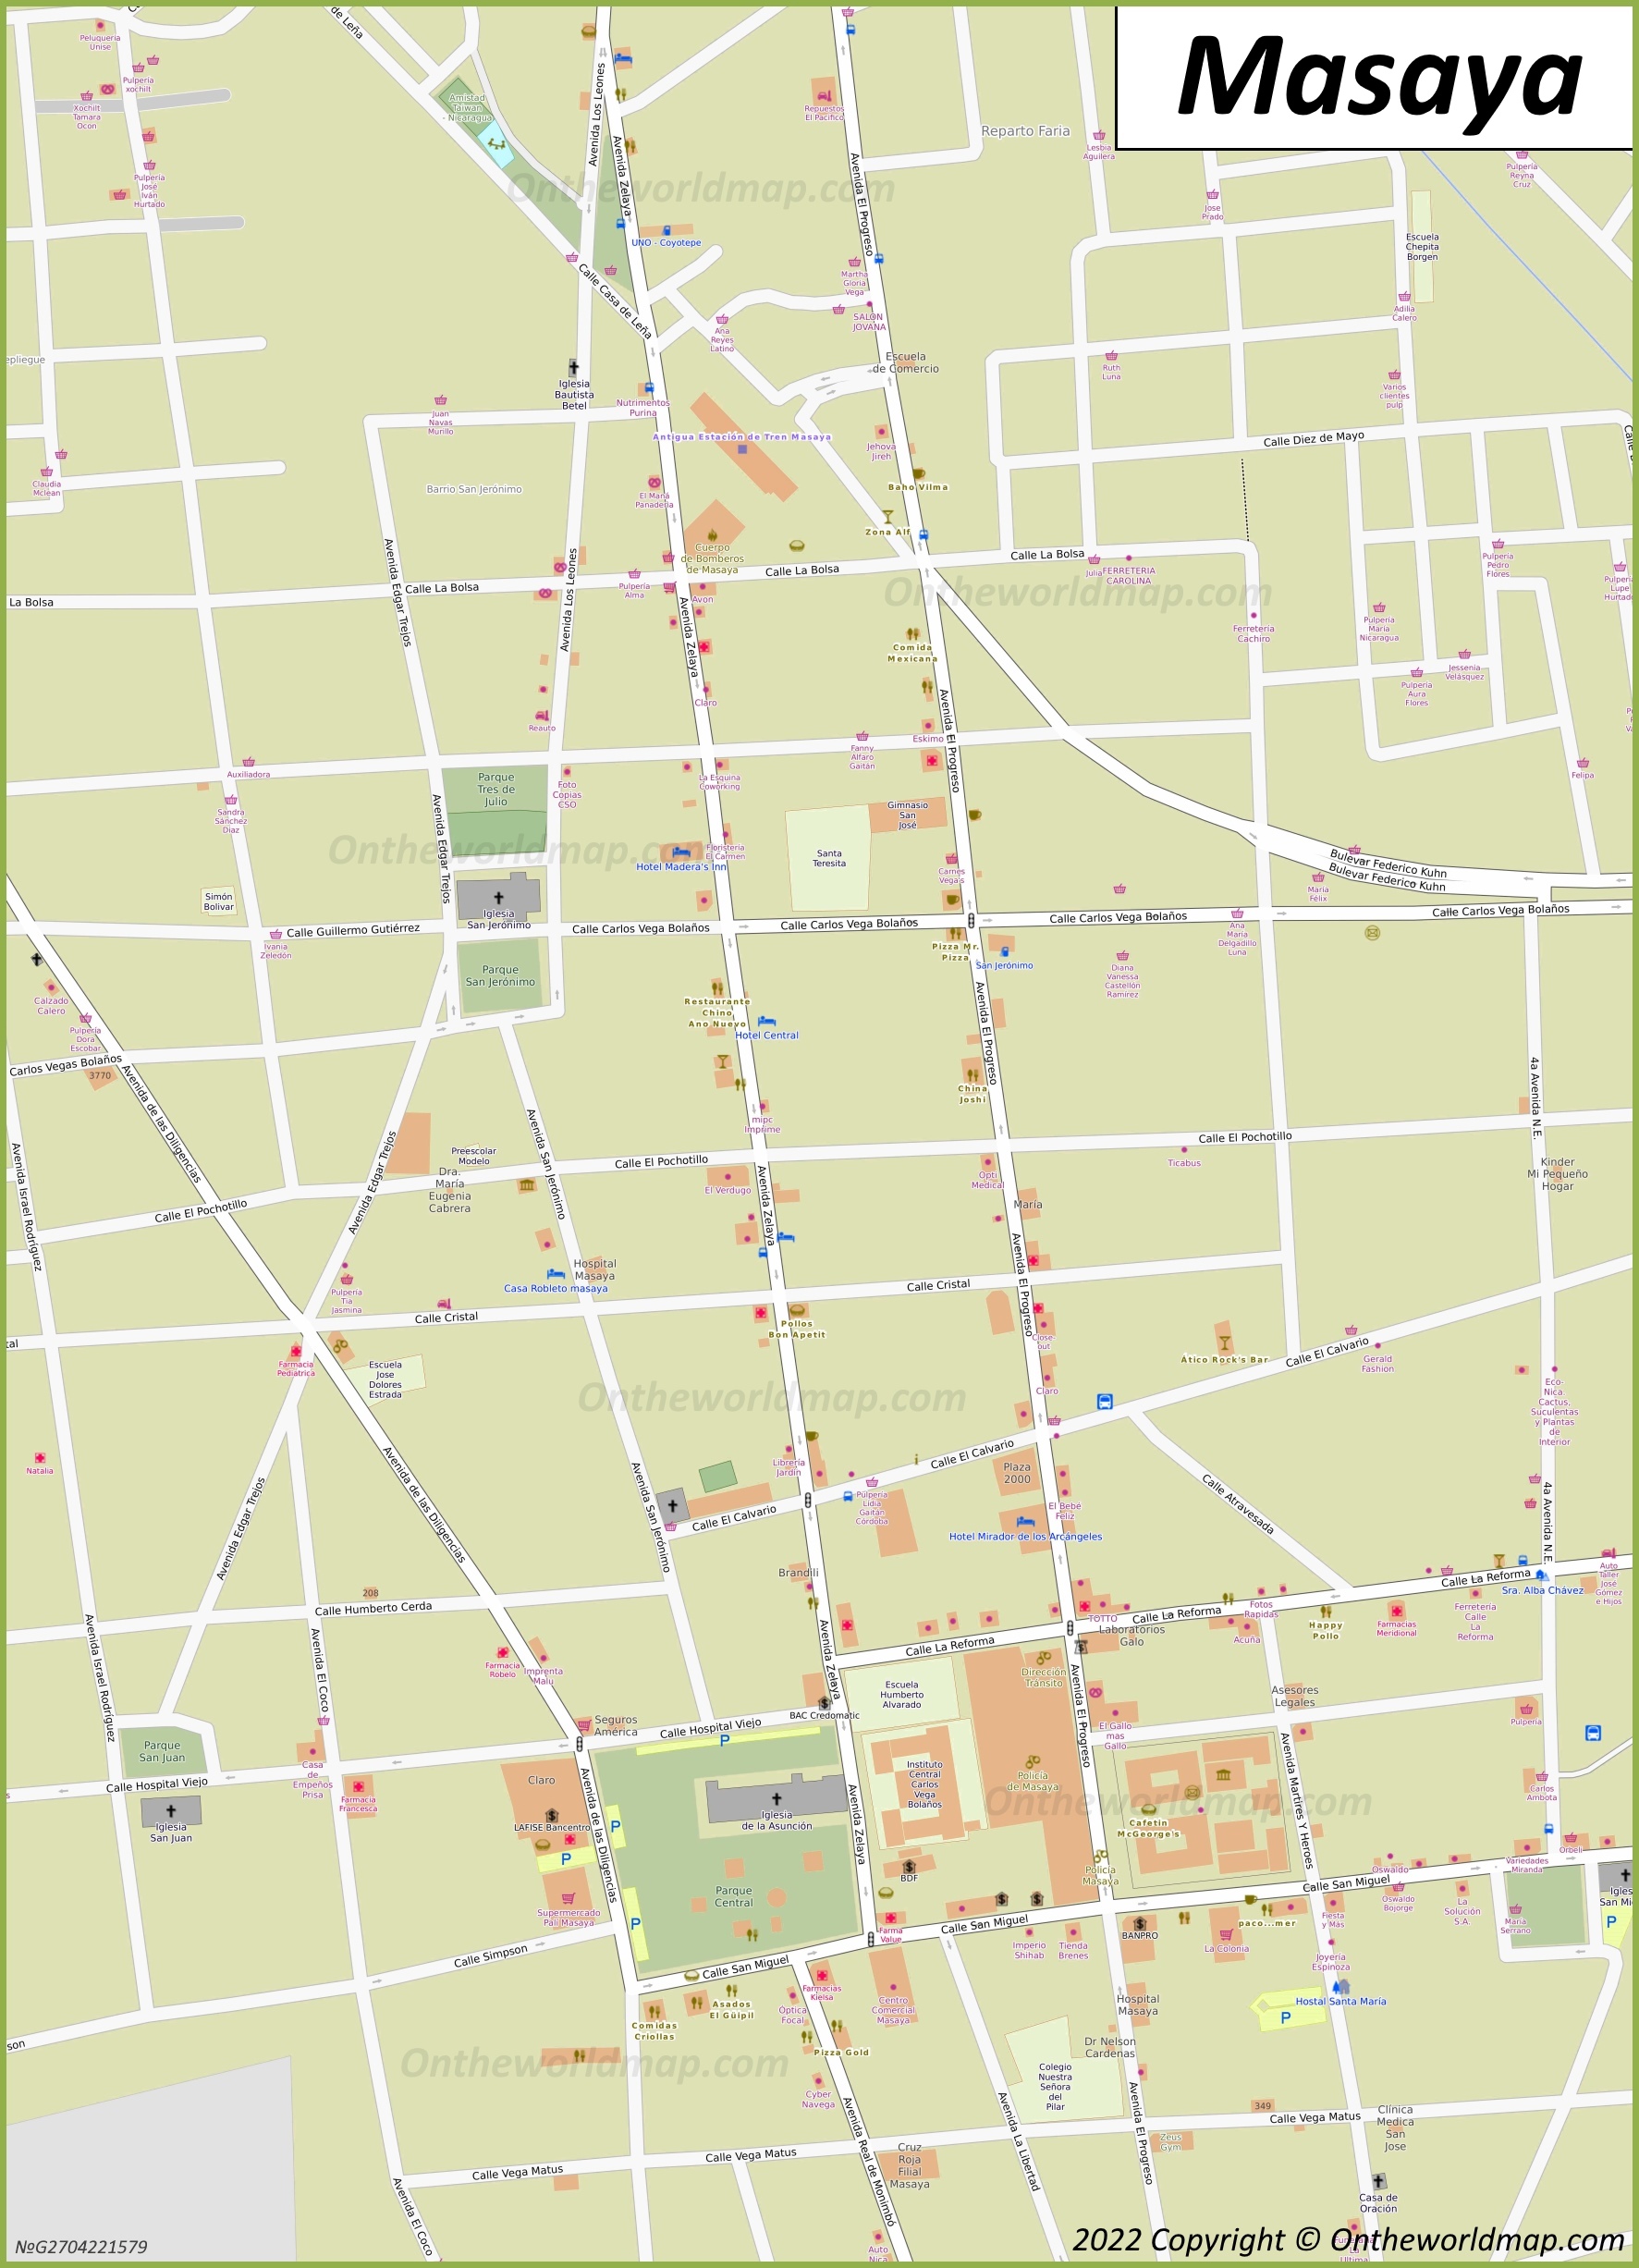 Masaya Old Town Map